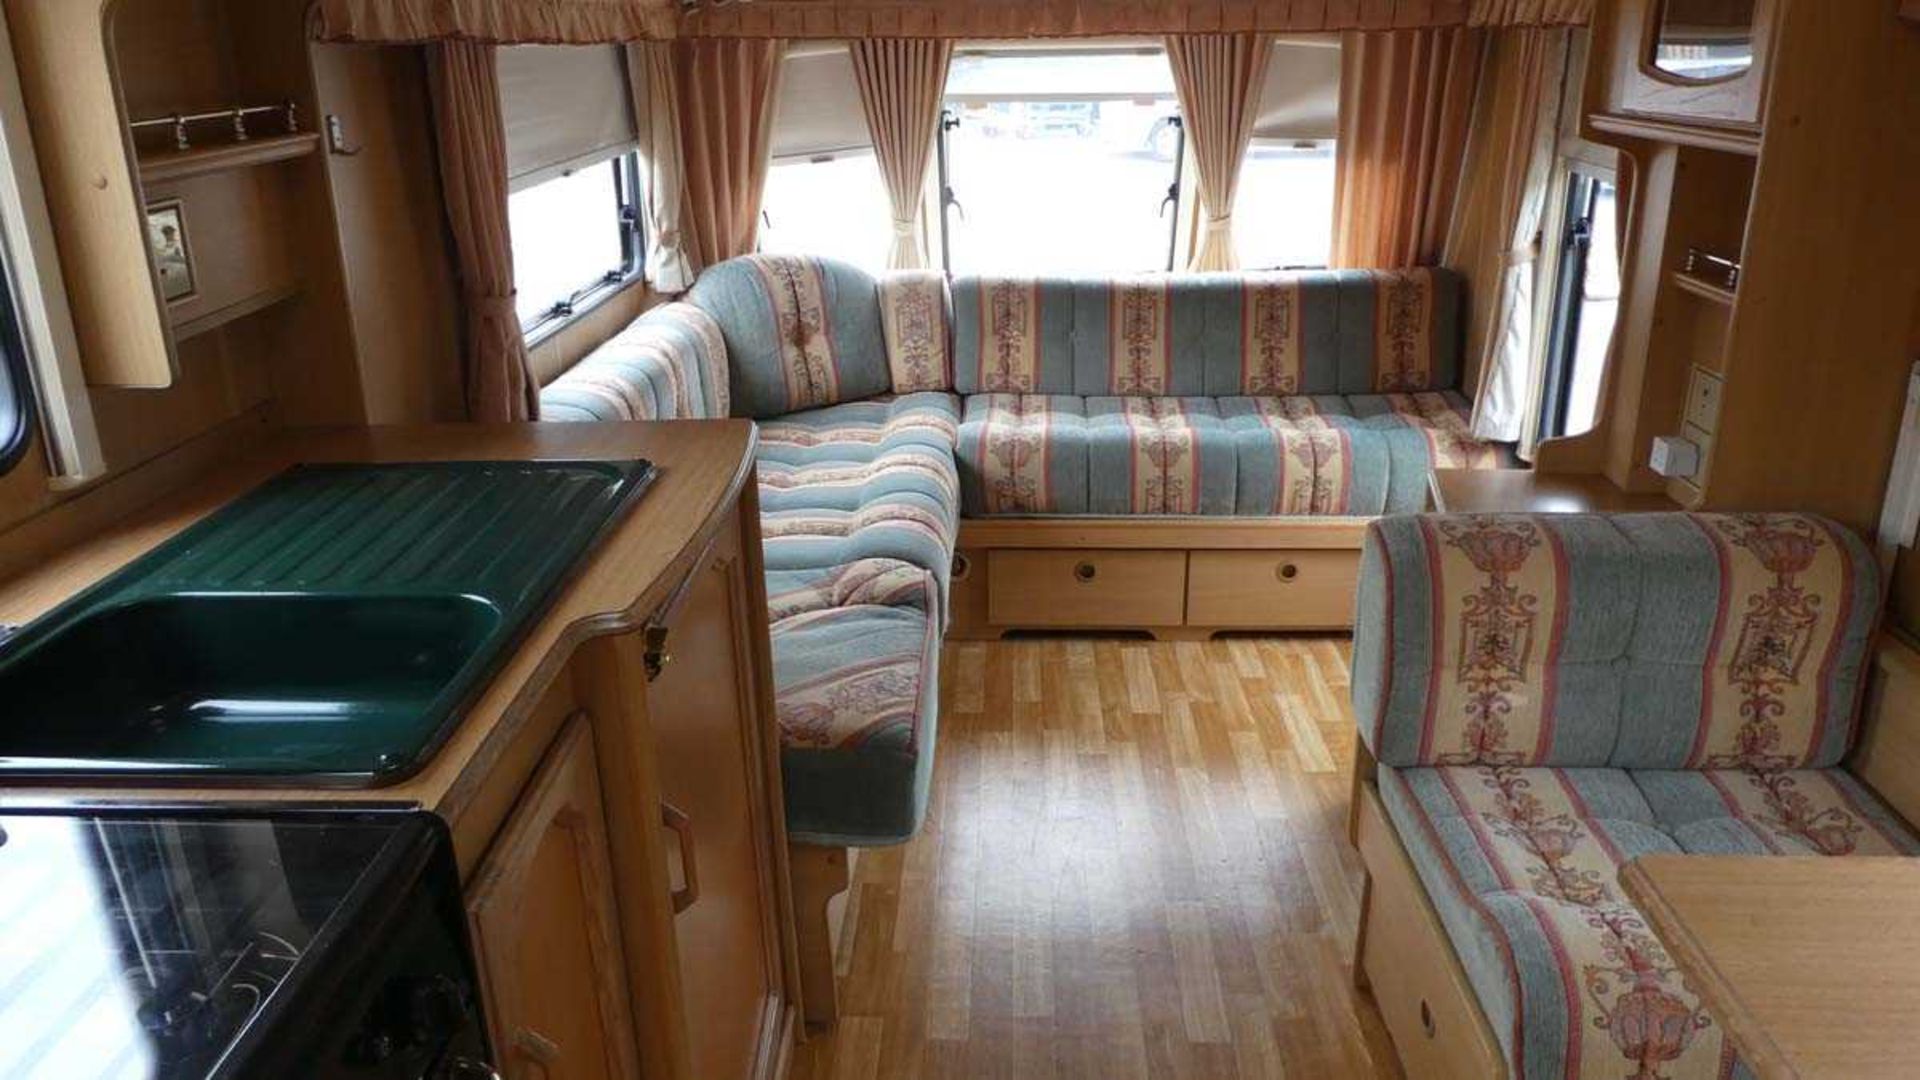 Abi Award Morningstar 18ft touring caravan, 4-5 berth with cooker, refrigerator, WC, shower, - Image 11 of 12